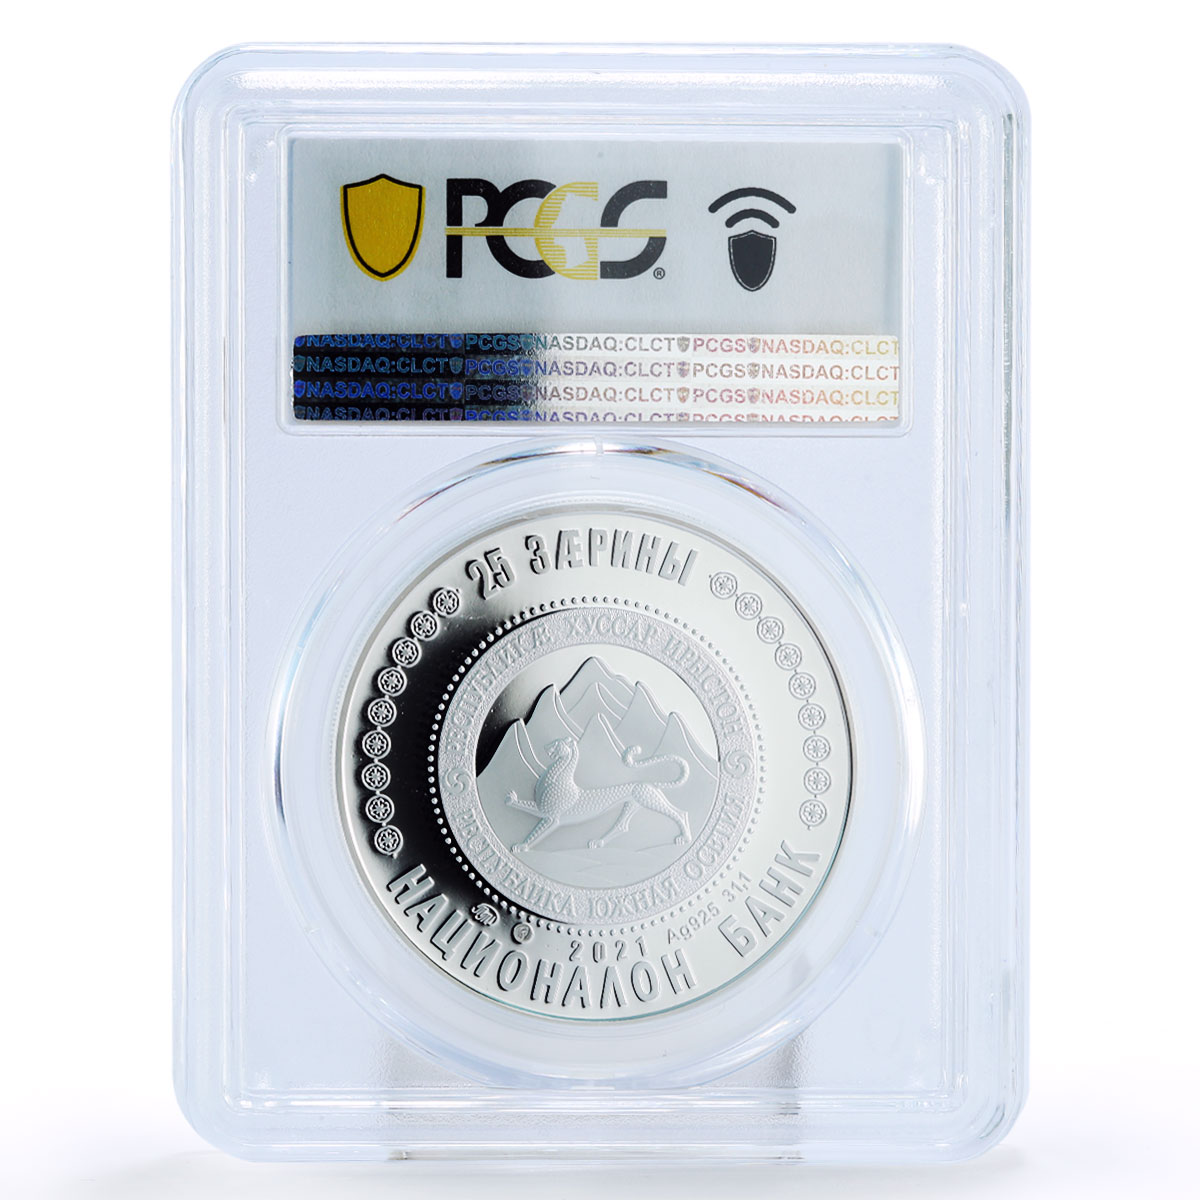 South Ossetia 25 zarin 140 Birth Maharbek Tuganov PR70 PCGS silver coin 2021